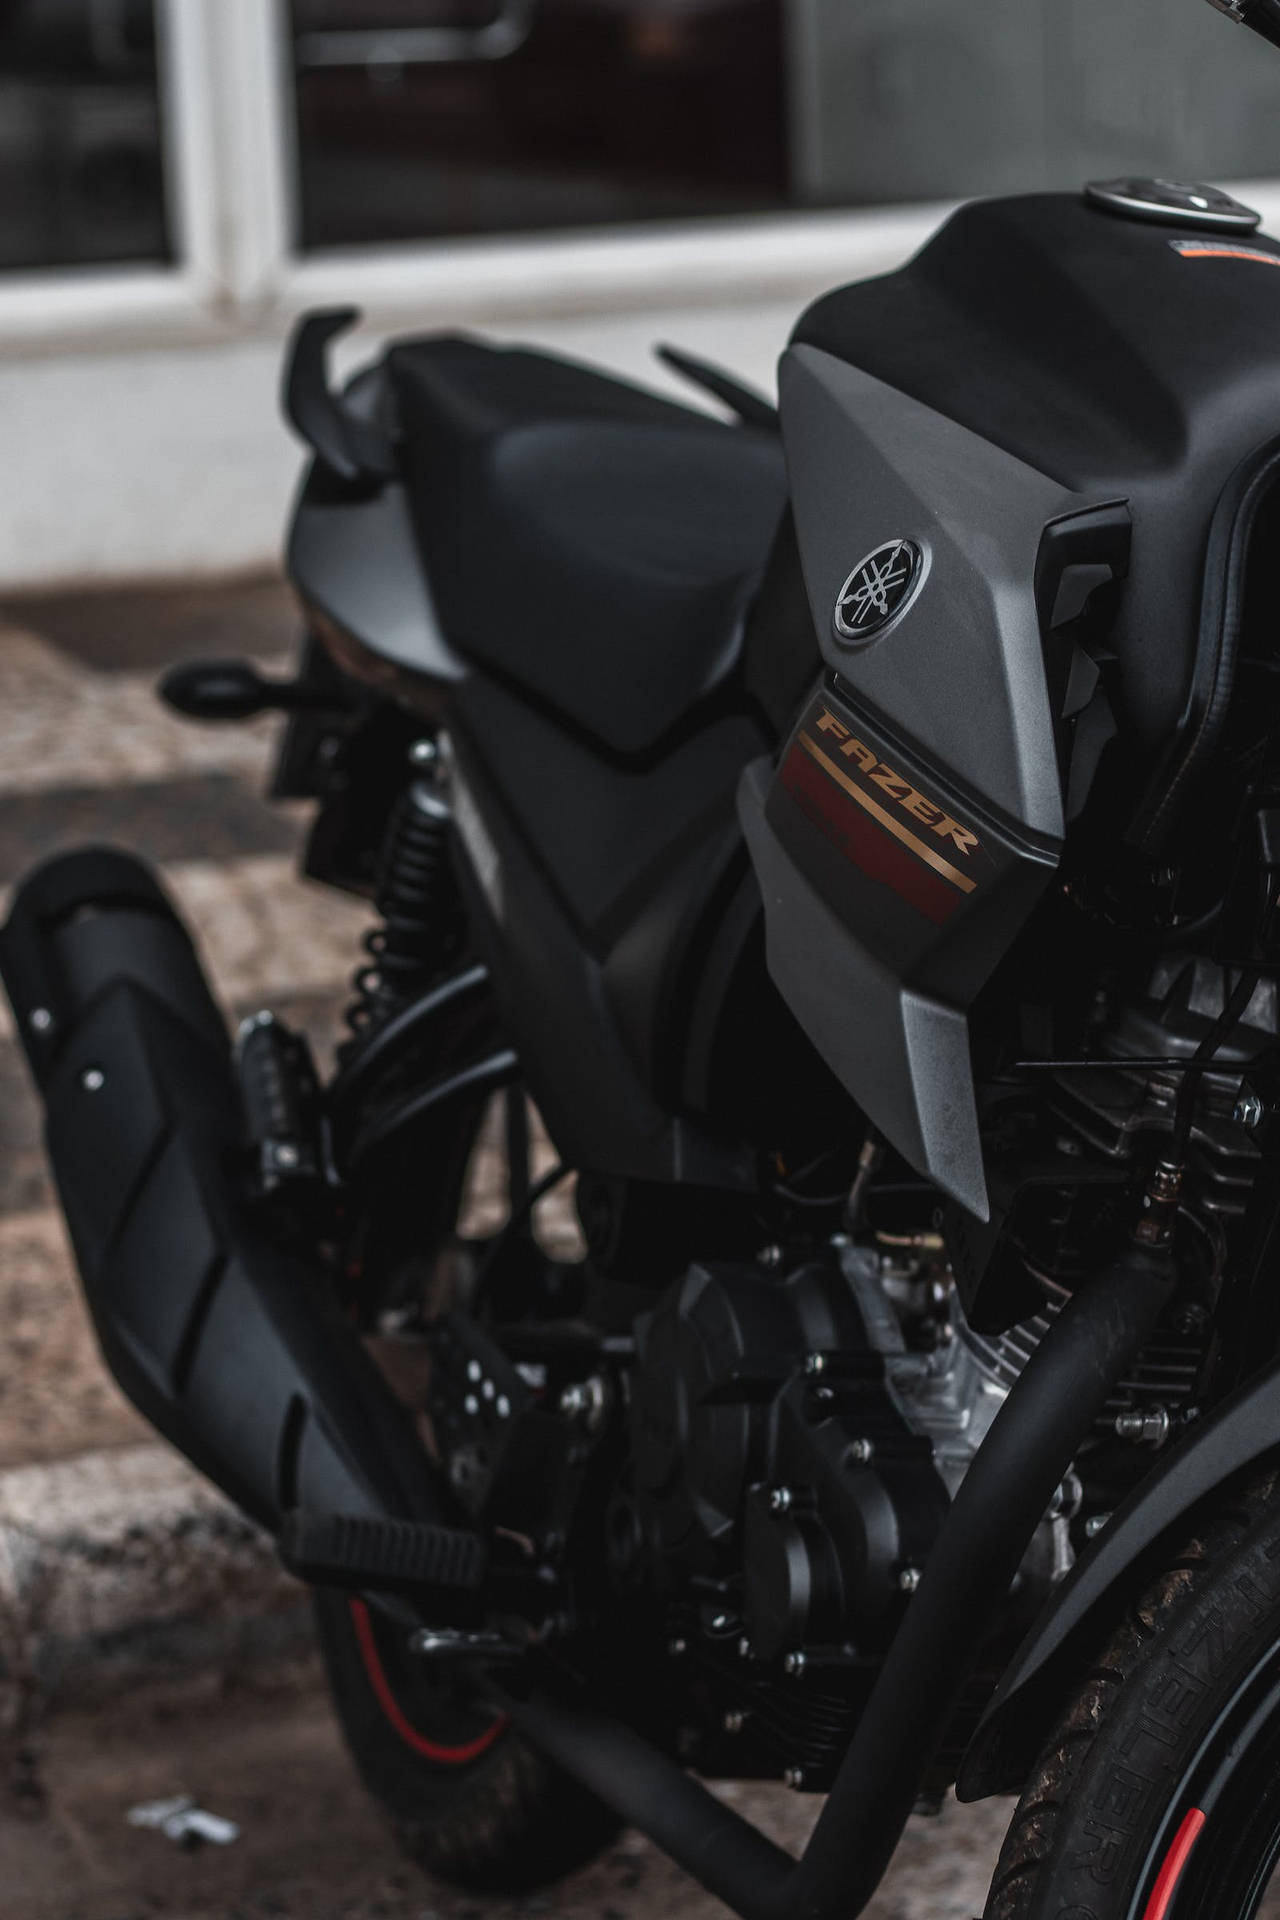 Matte Black Yamaha Mt 15 Motorcycle Background